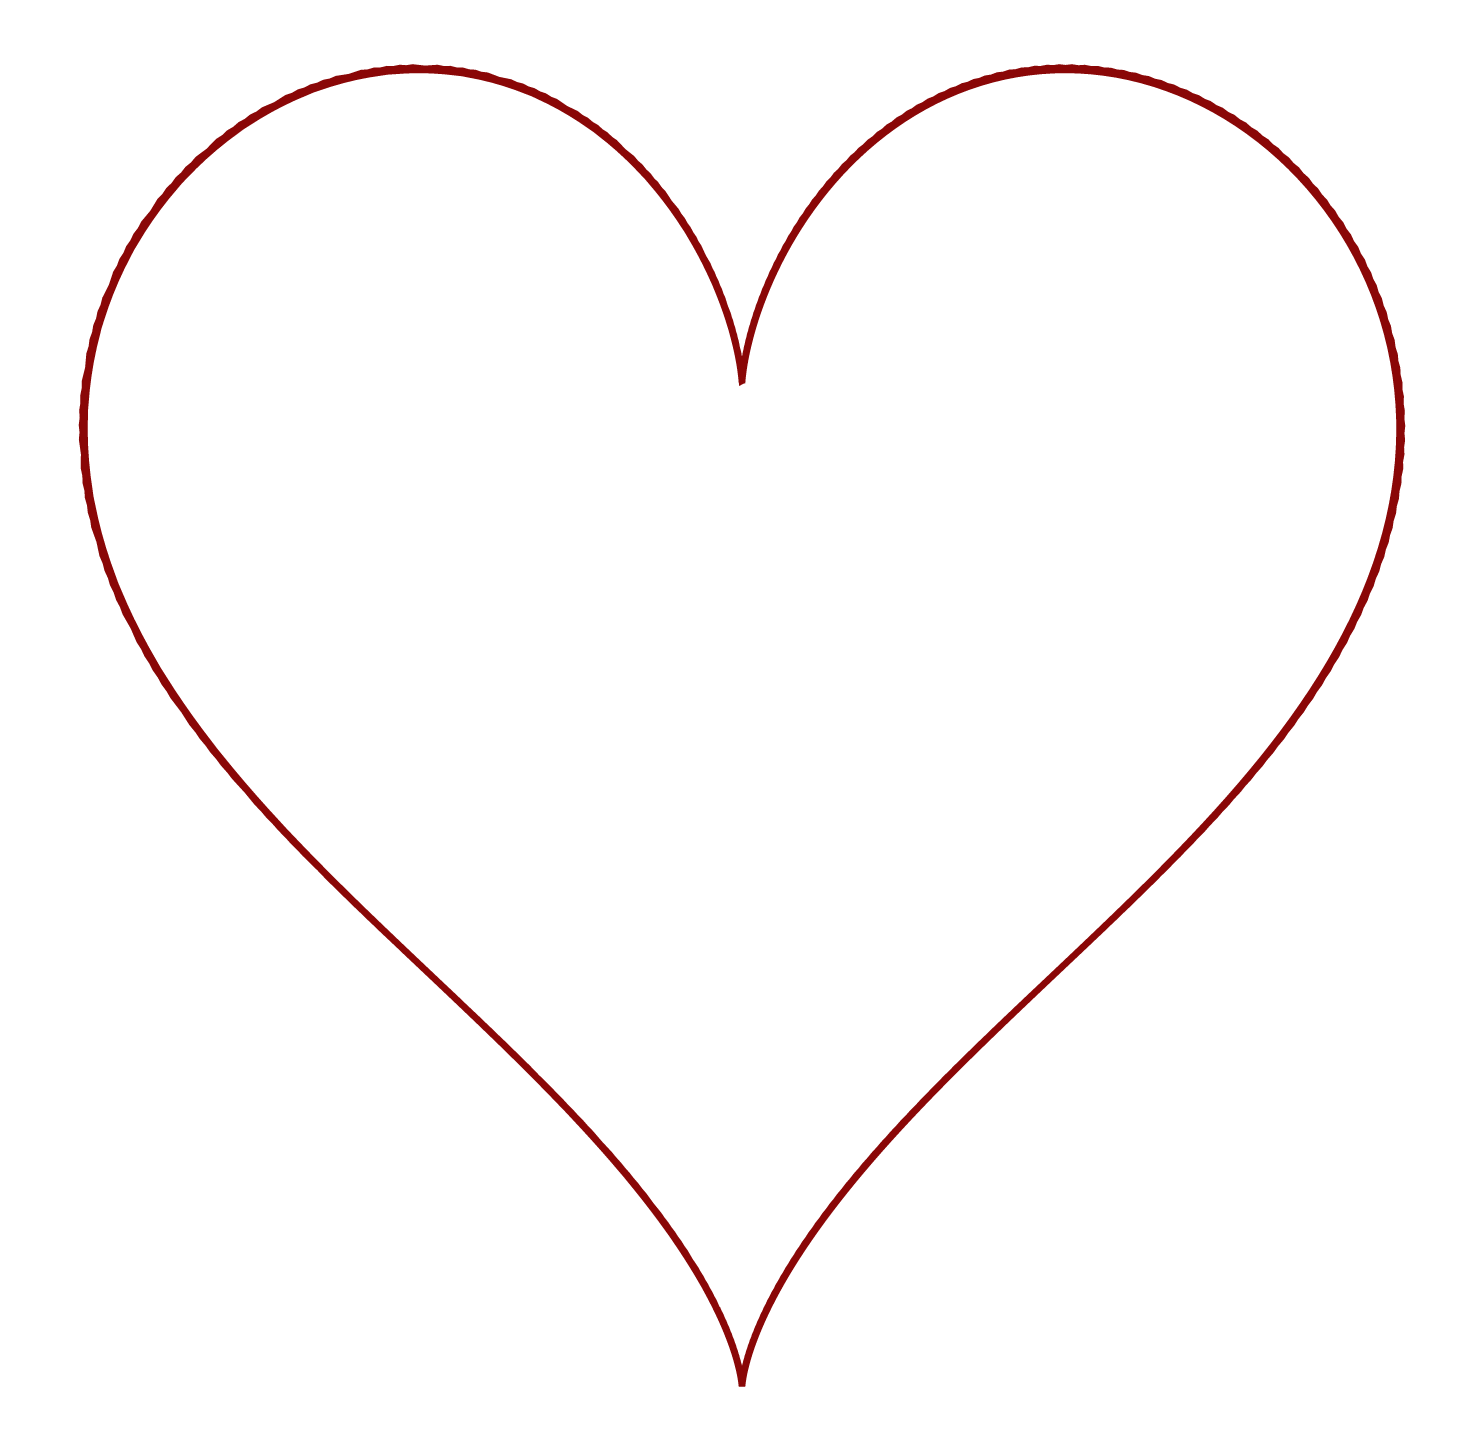 https://www.visualcinnamon.com/img/blog/2015/heart-curve/heart_curve.png